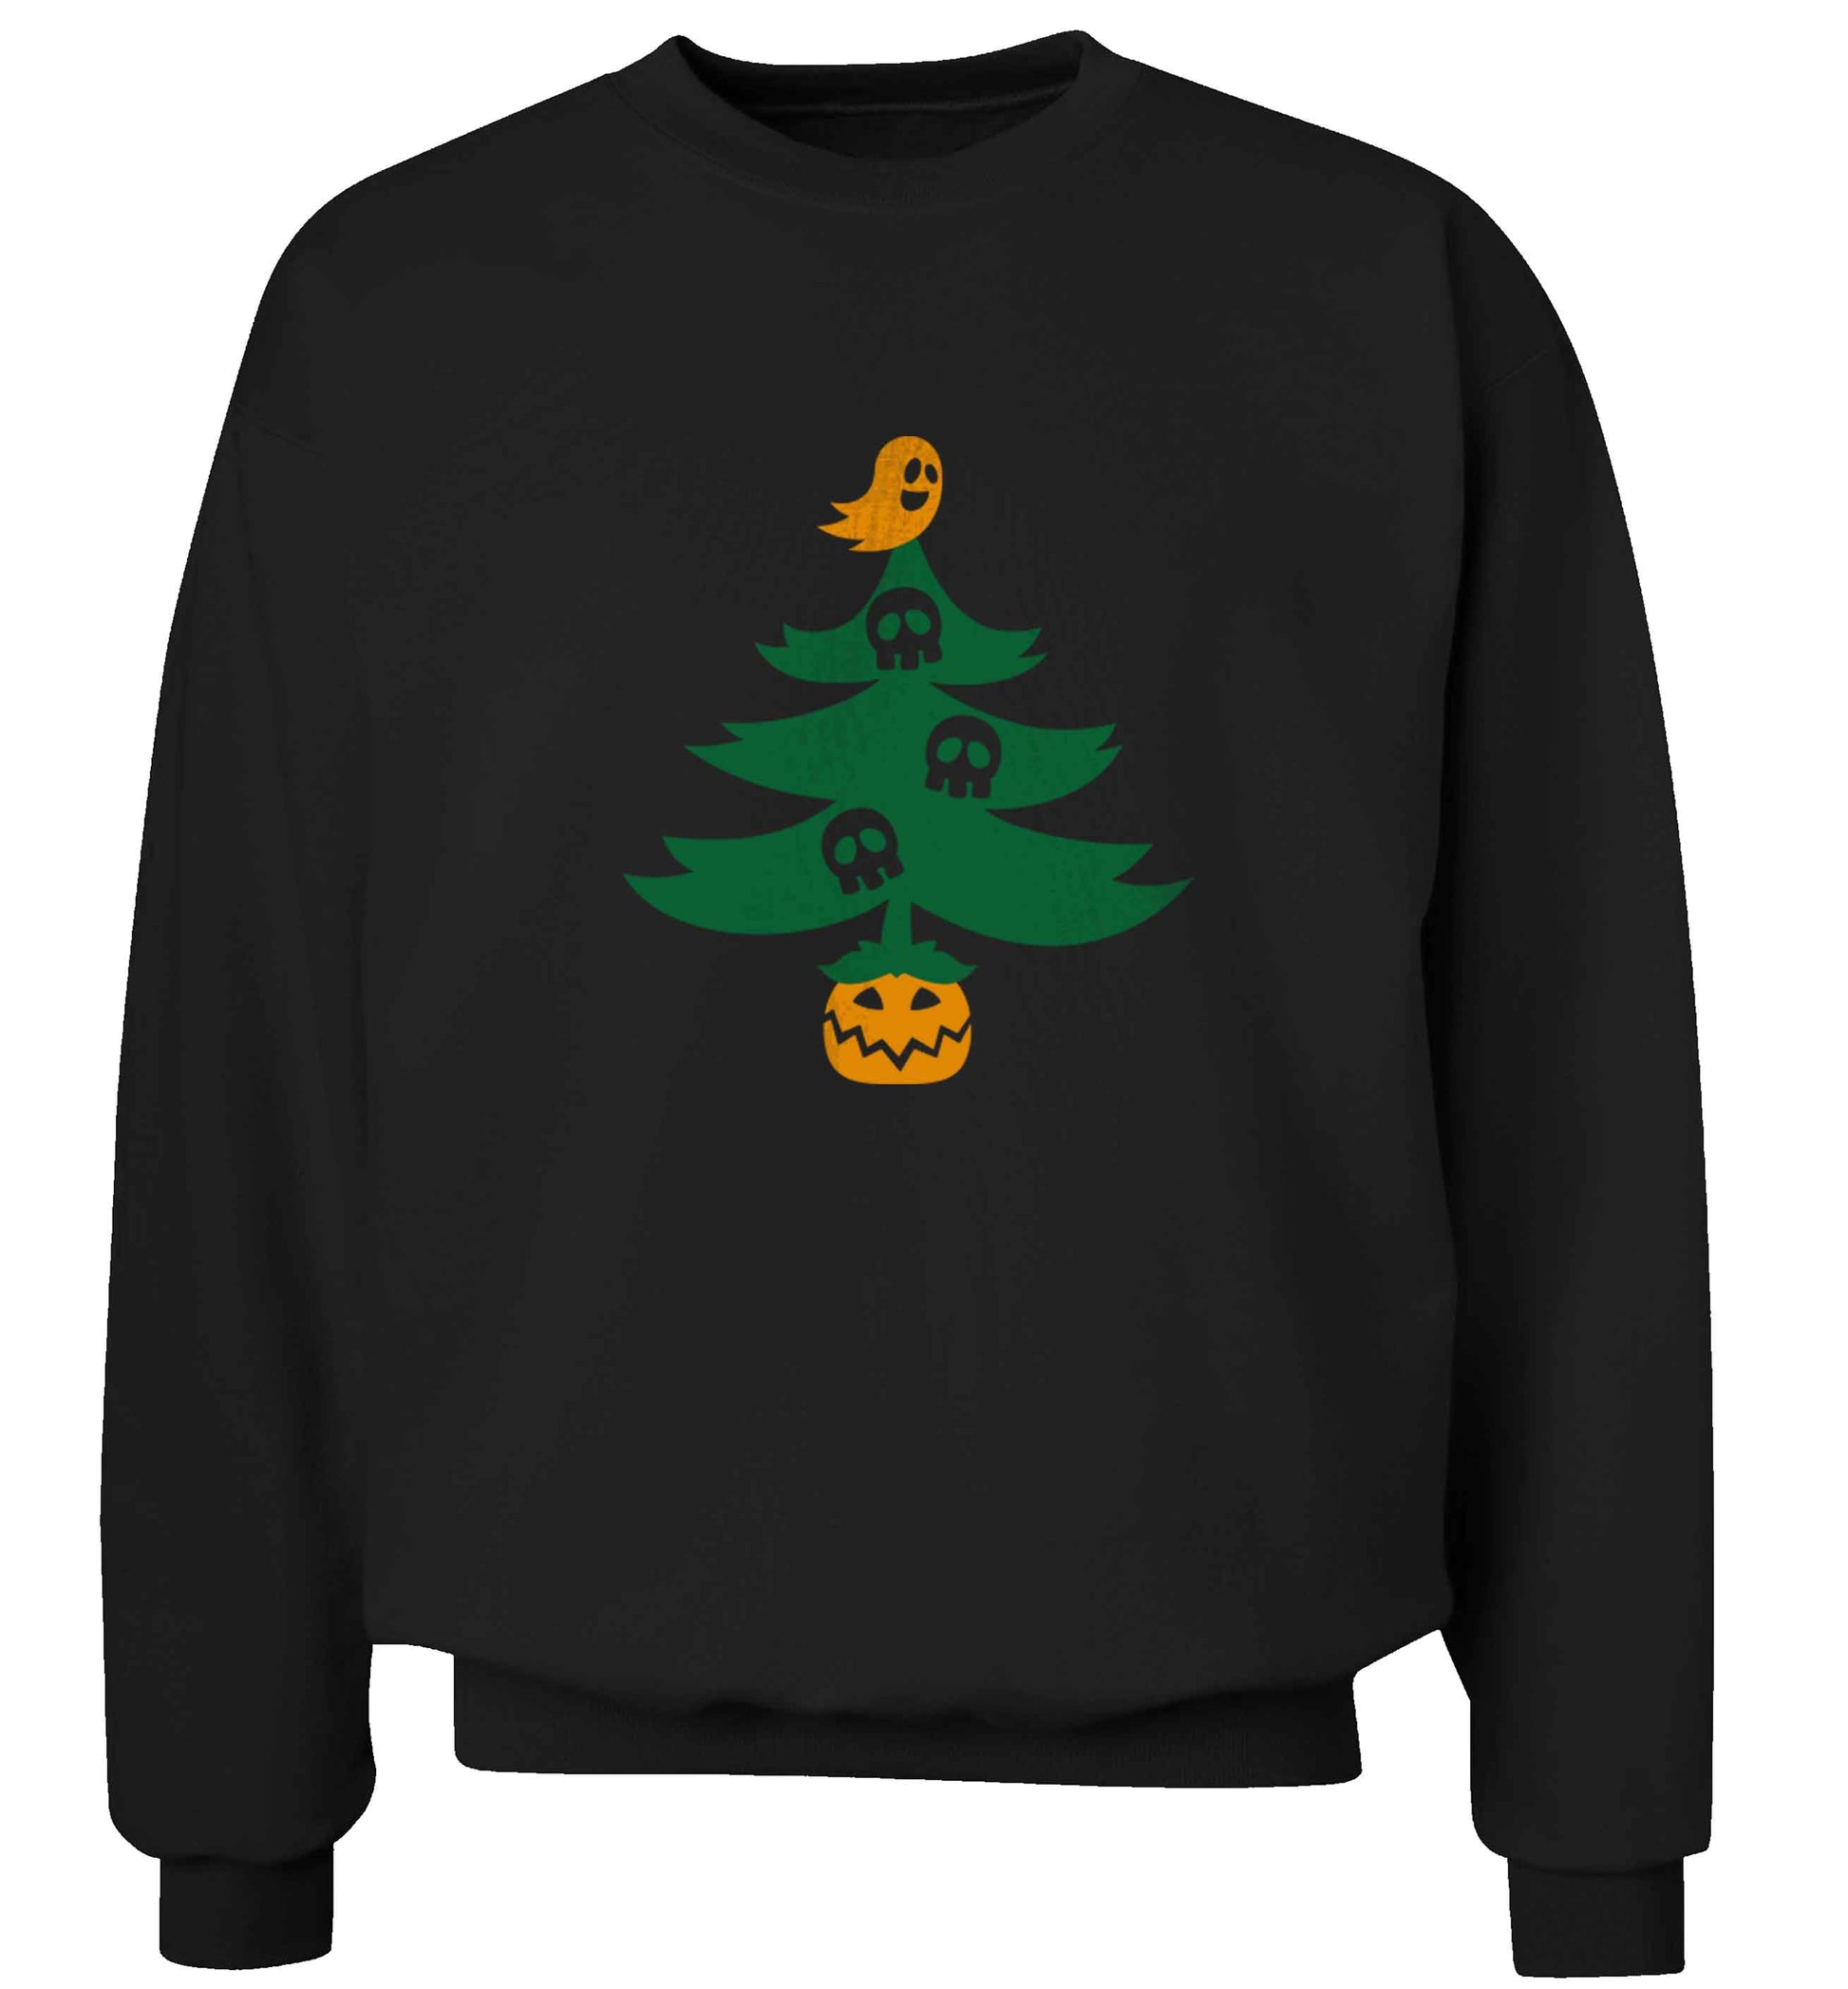 Halloween Christmas tree adult's unisex black sweater 2XL